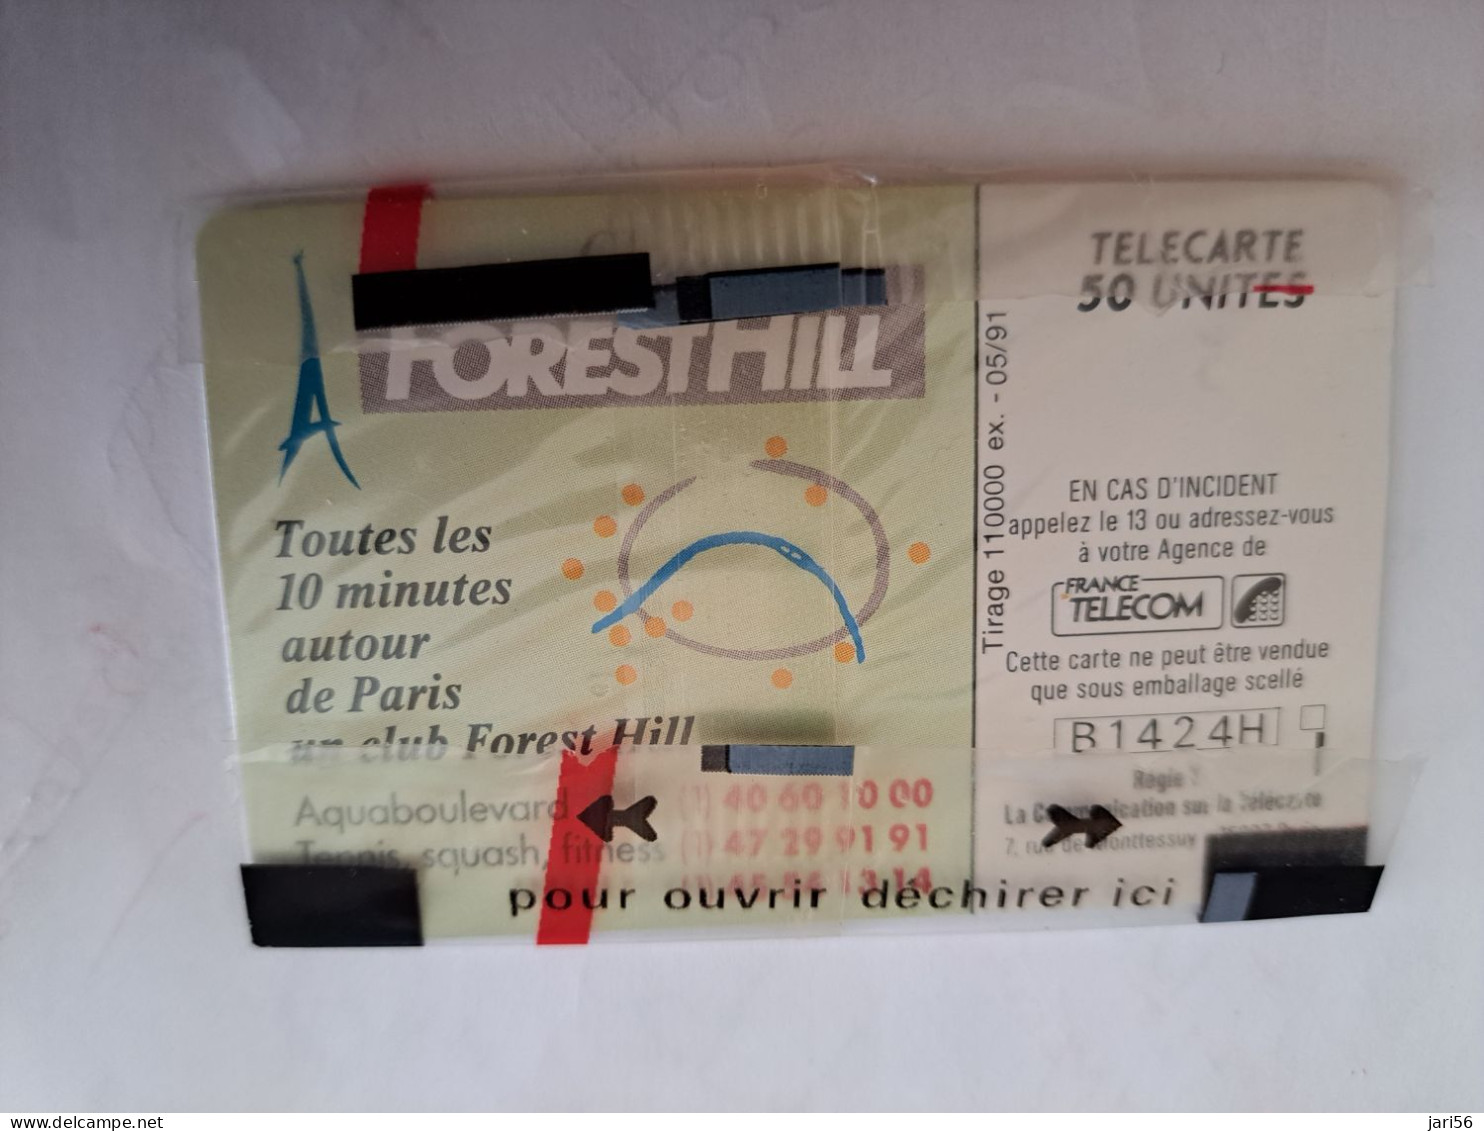 FRANCE/FRANKRIJK   CHIPCARD   50 UNITS / FOREST HILL    MINT IN WRAPPER     WITH CHIP     ** 14111** - Mobicartes: Móviles/SIM)